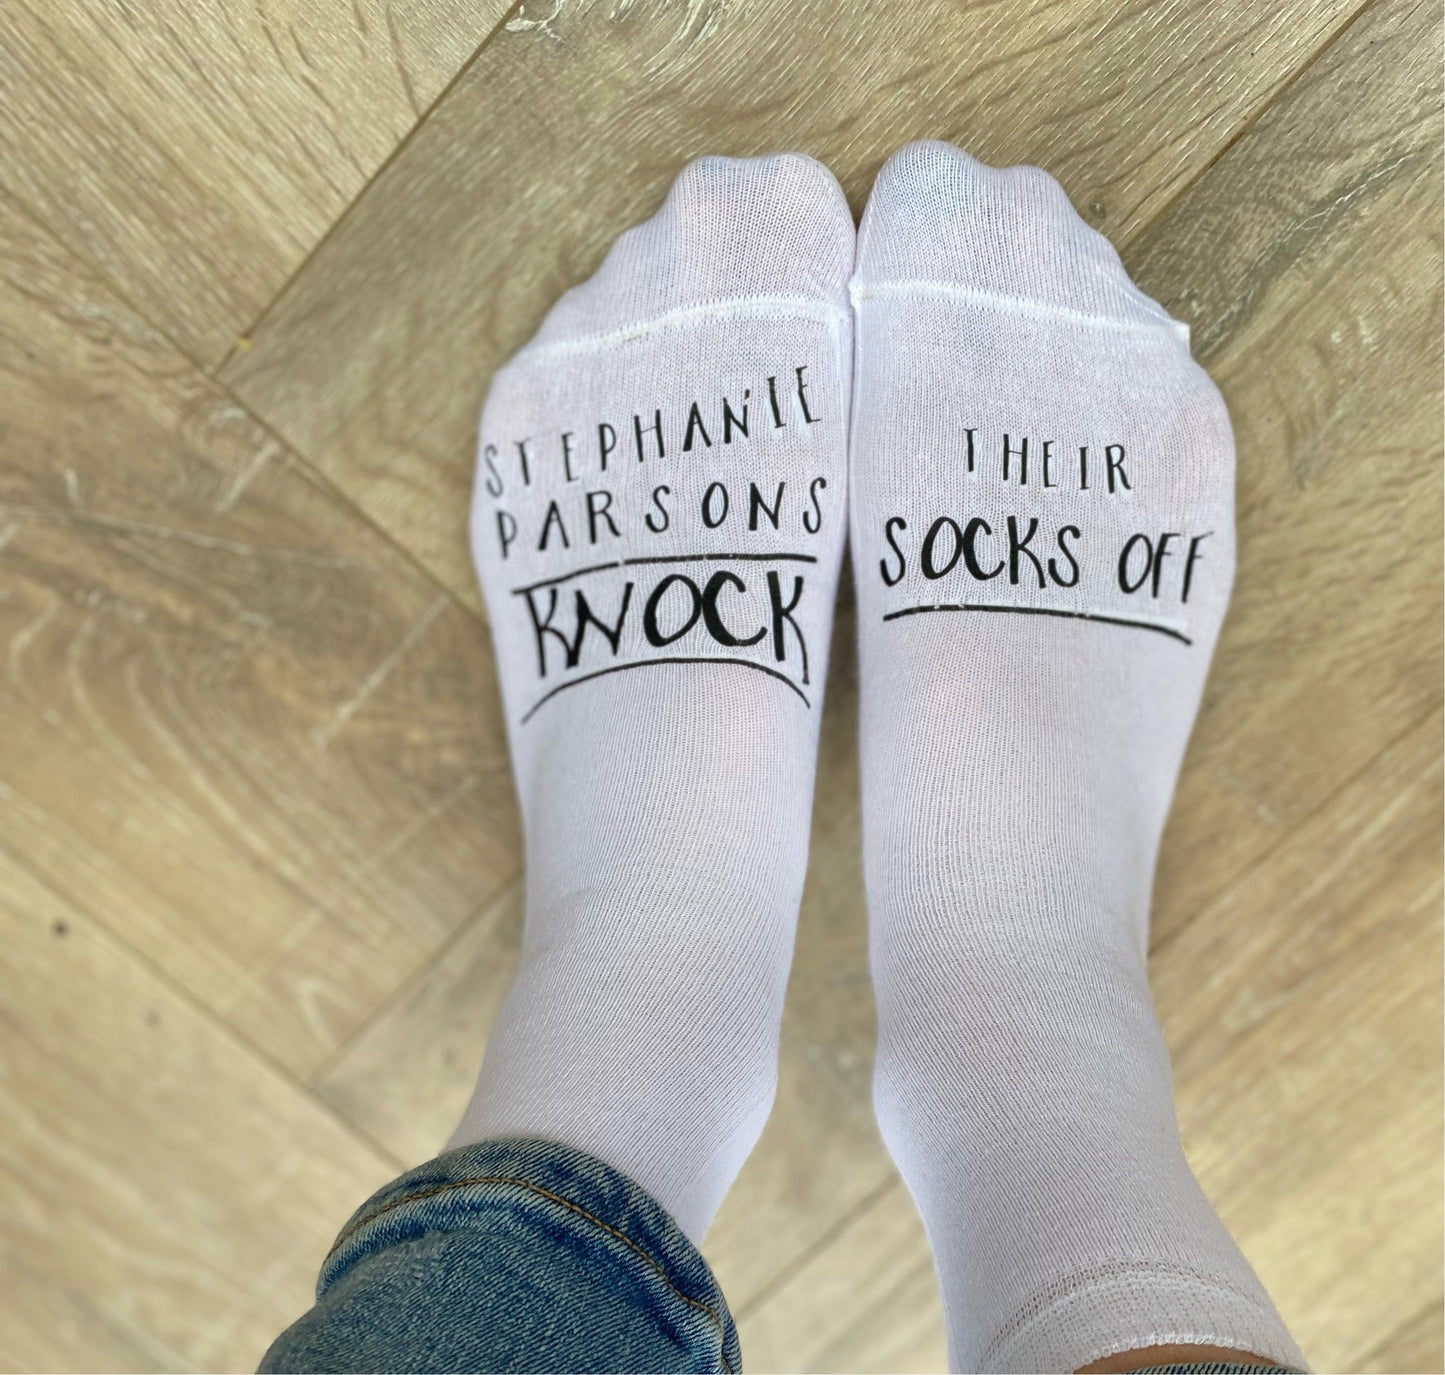 Knock their socks off positive Socks